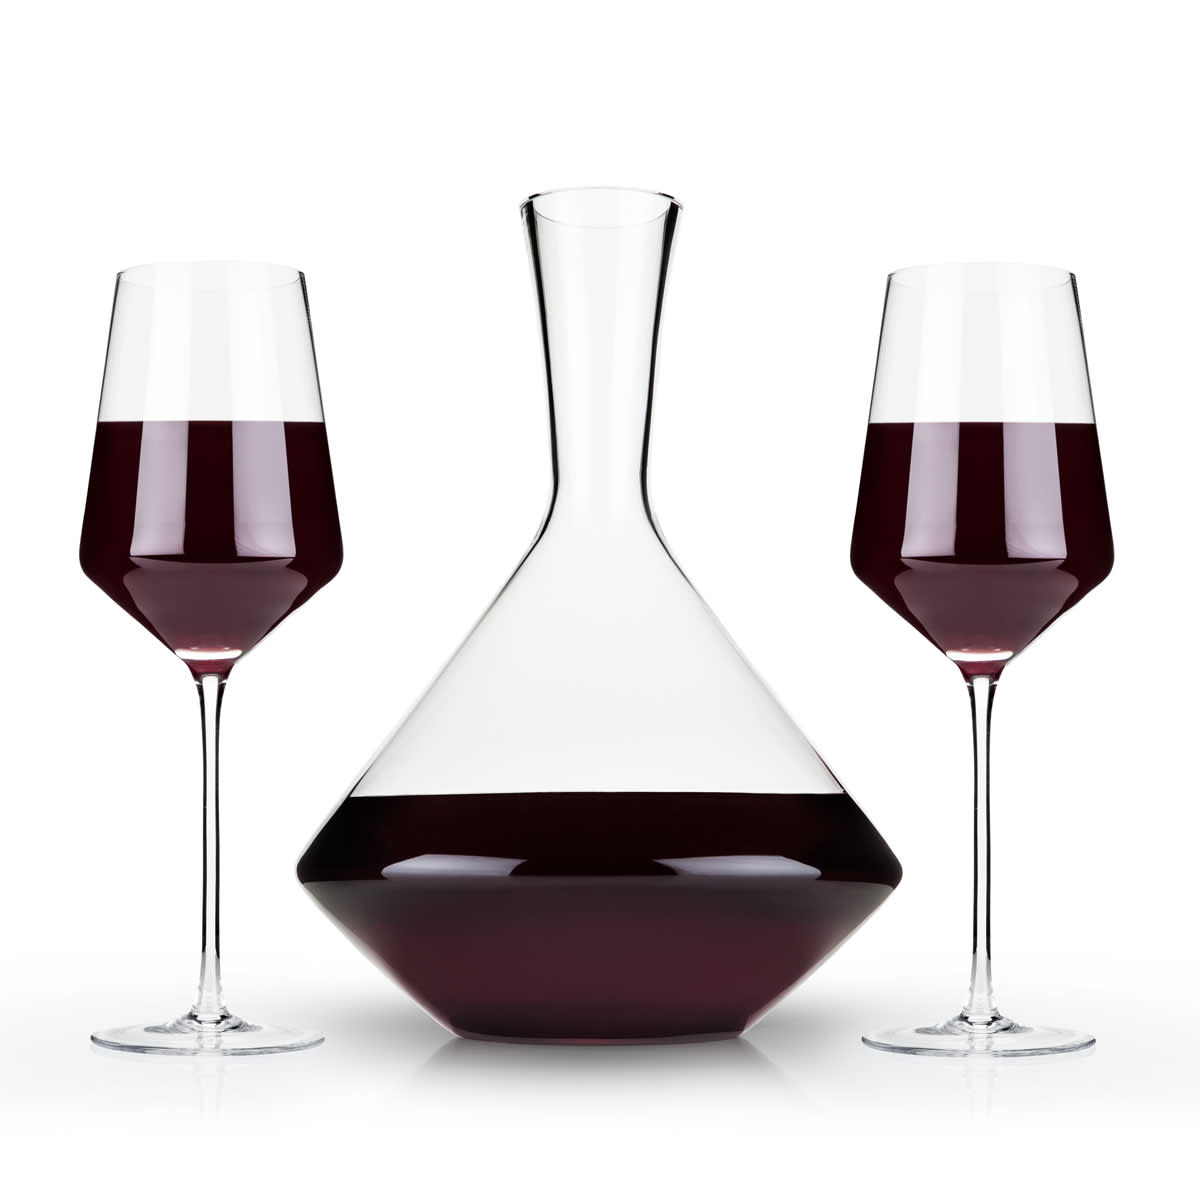 Viski Raye Angled Crystal Bordeaux Wine Glasses Set Of 2 - Premium